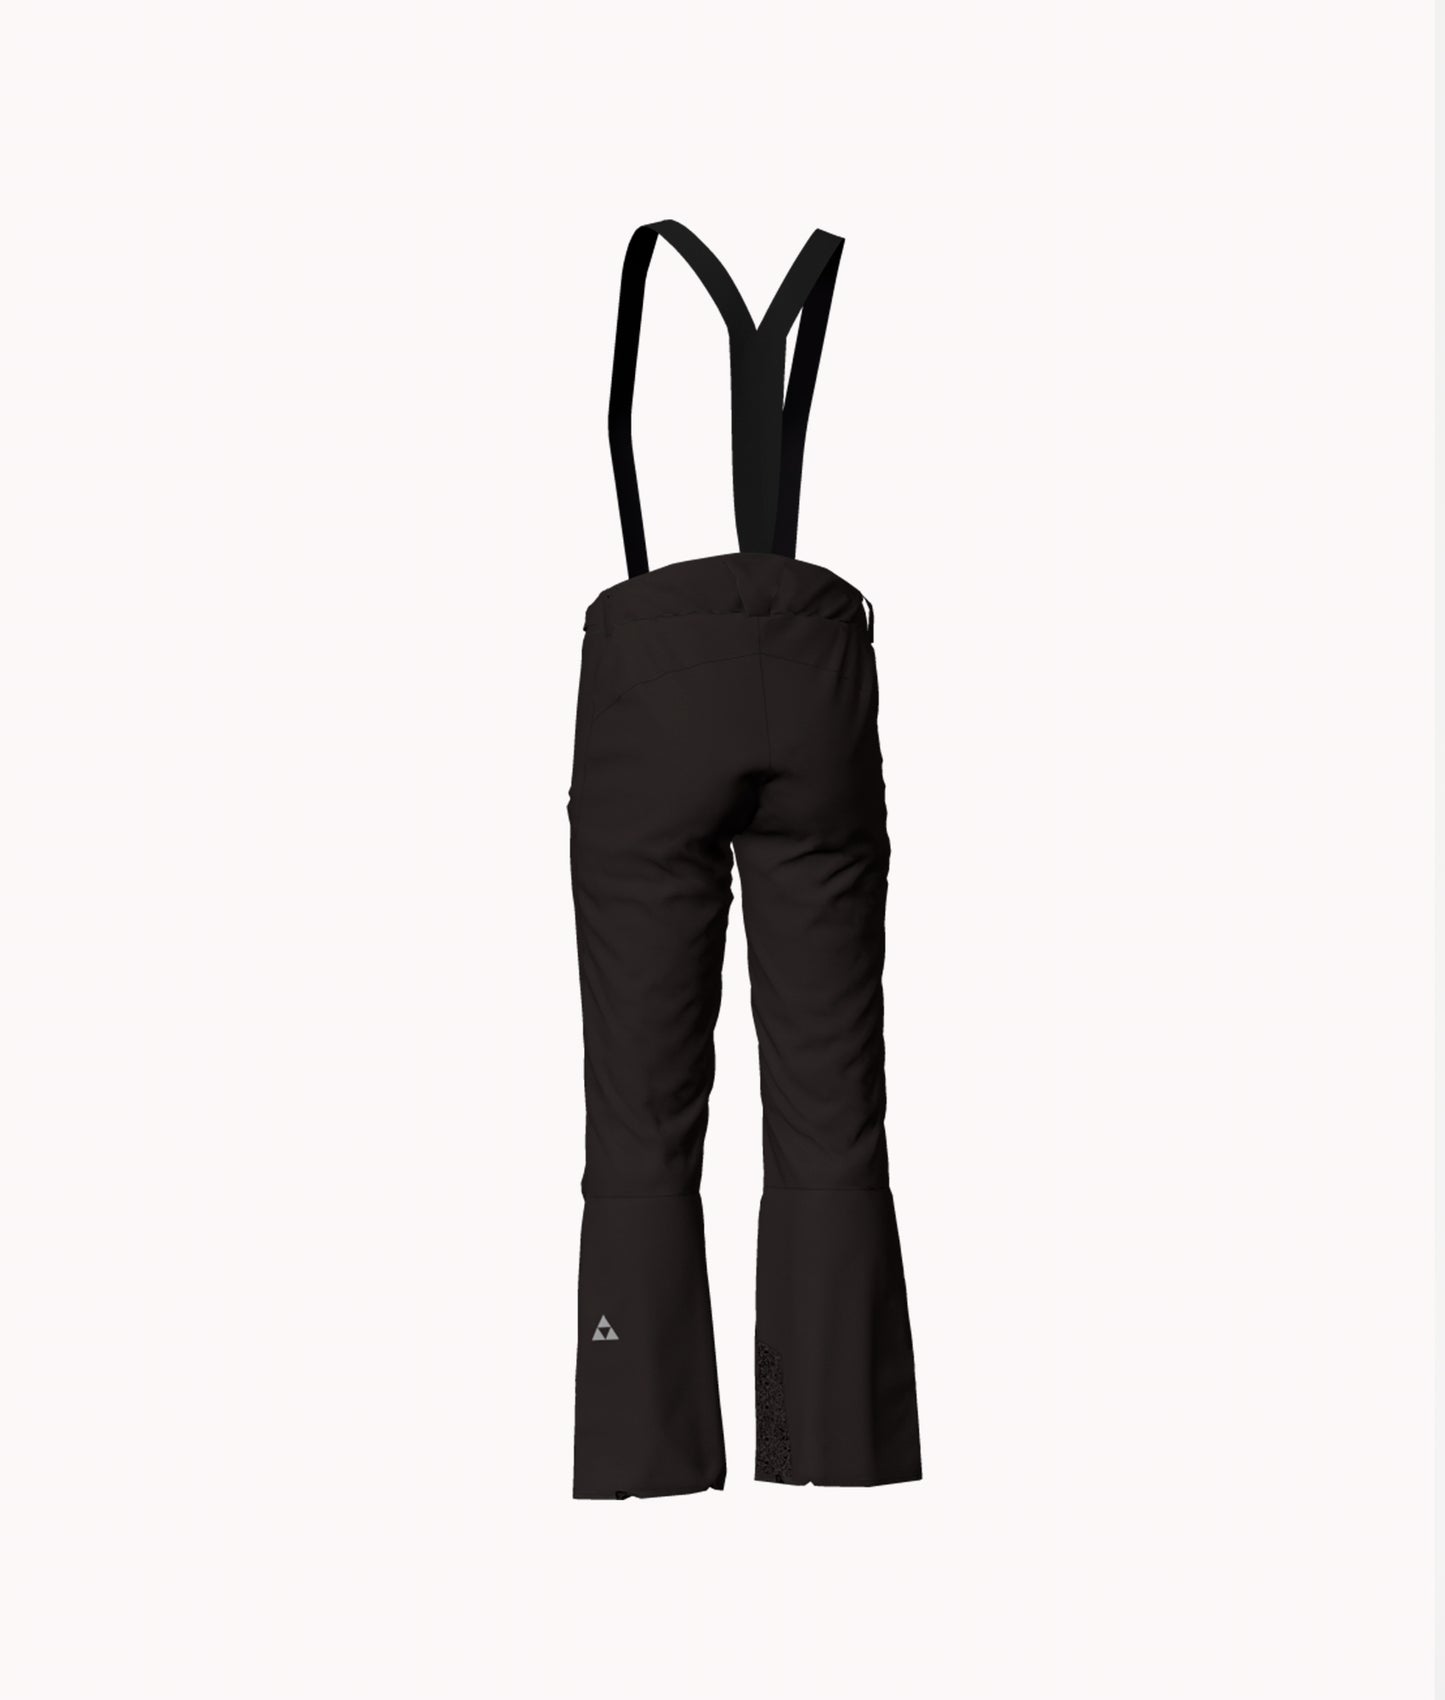 Fulpmes Insulated Ski Pants Women BLACK